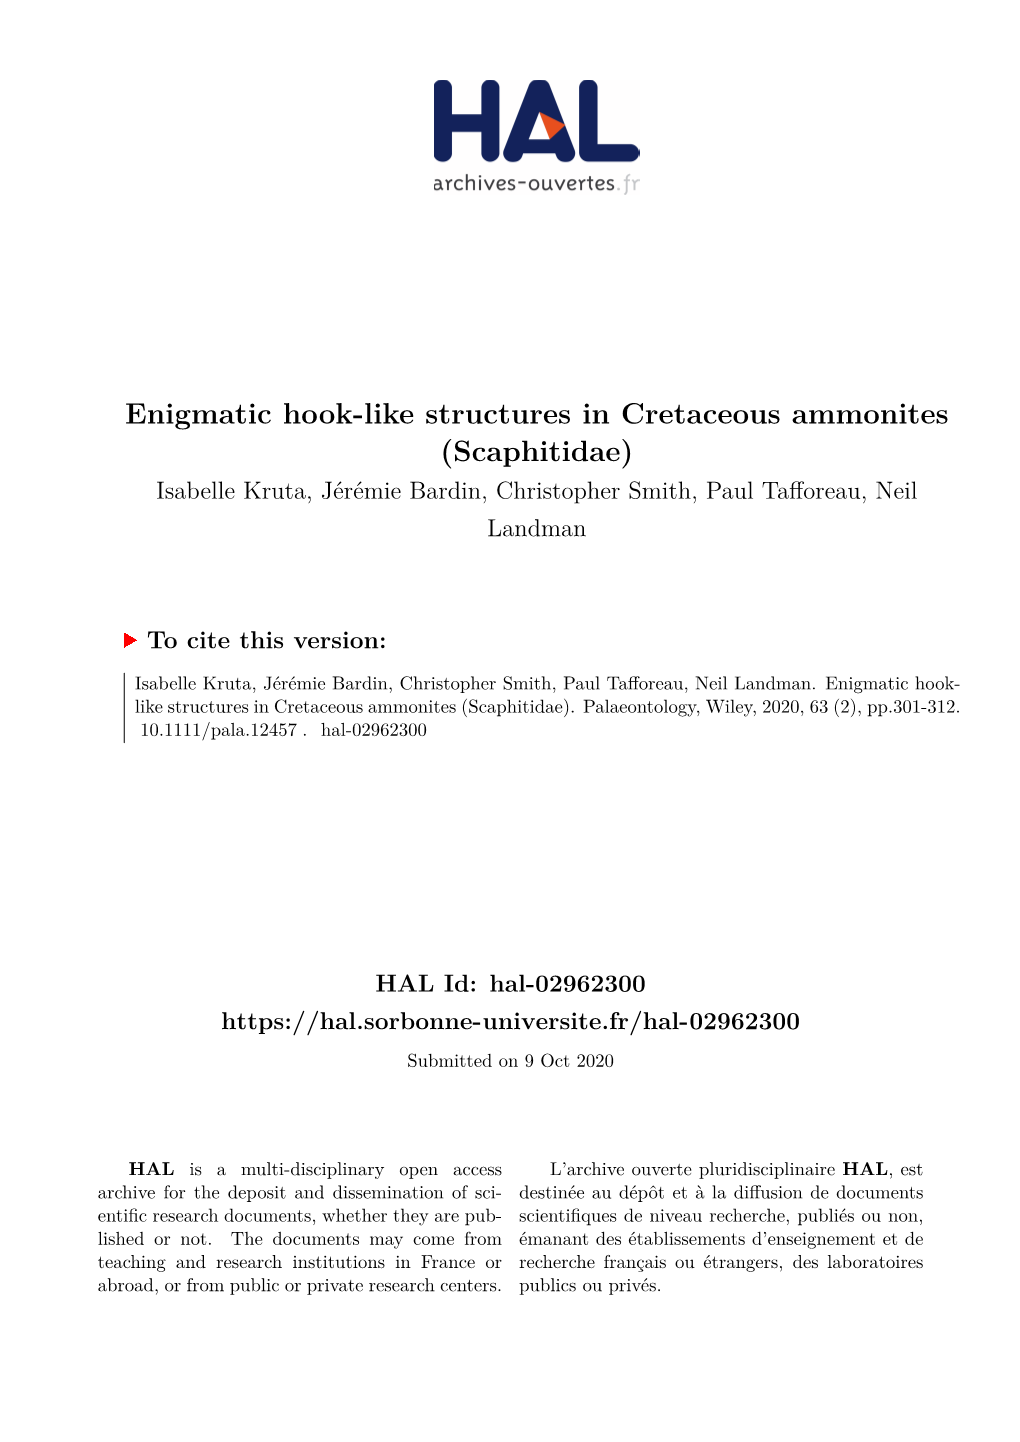 Enigmatic Hook-Like Structures in Cretaceous Ammonites (Scaphitidae) Isabelle Kruta, Jérémie Bardin, Christopher Smith, Paul Tafforeau, Neil Landman